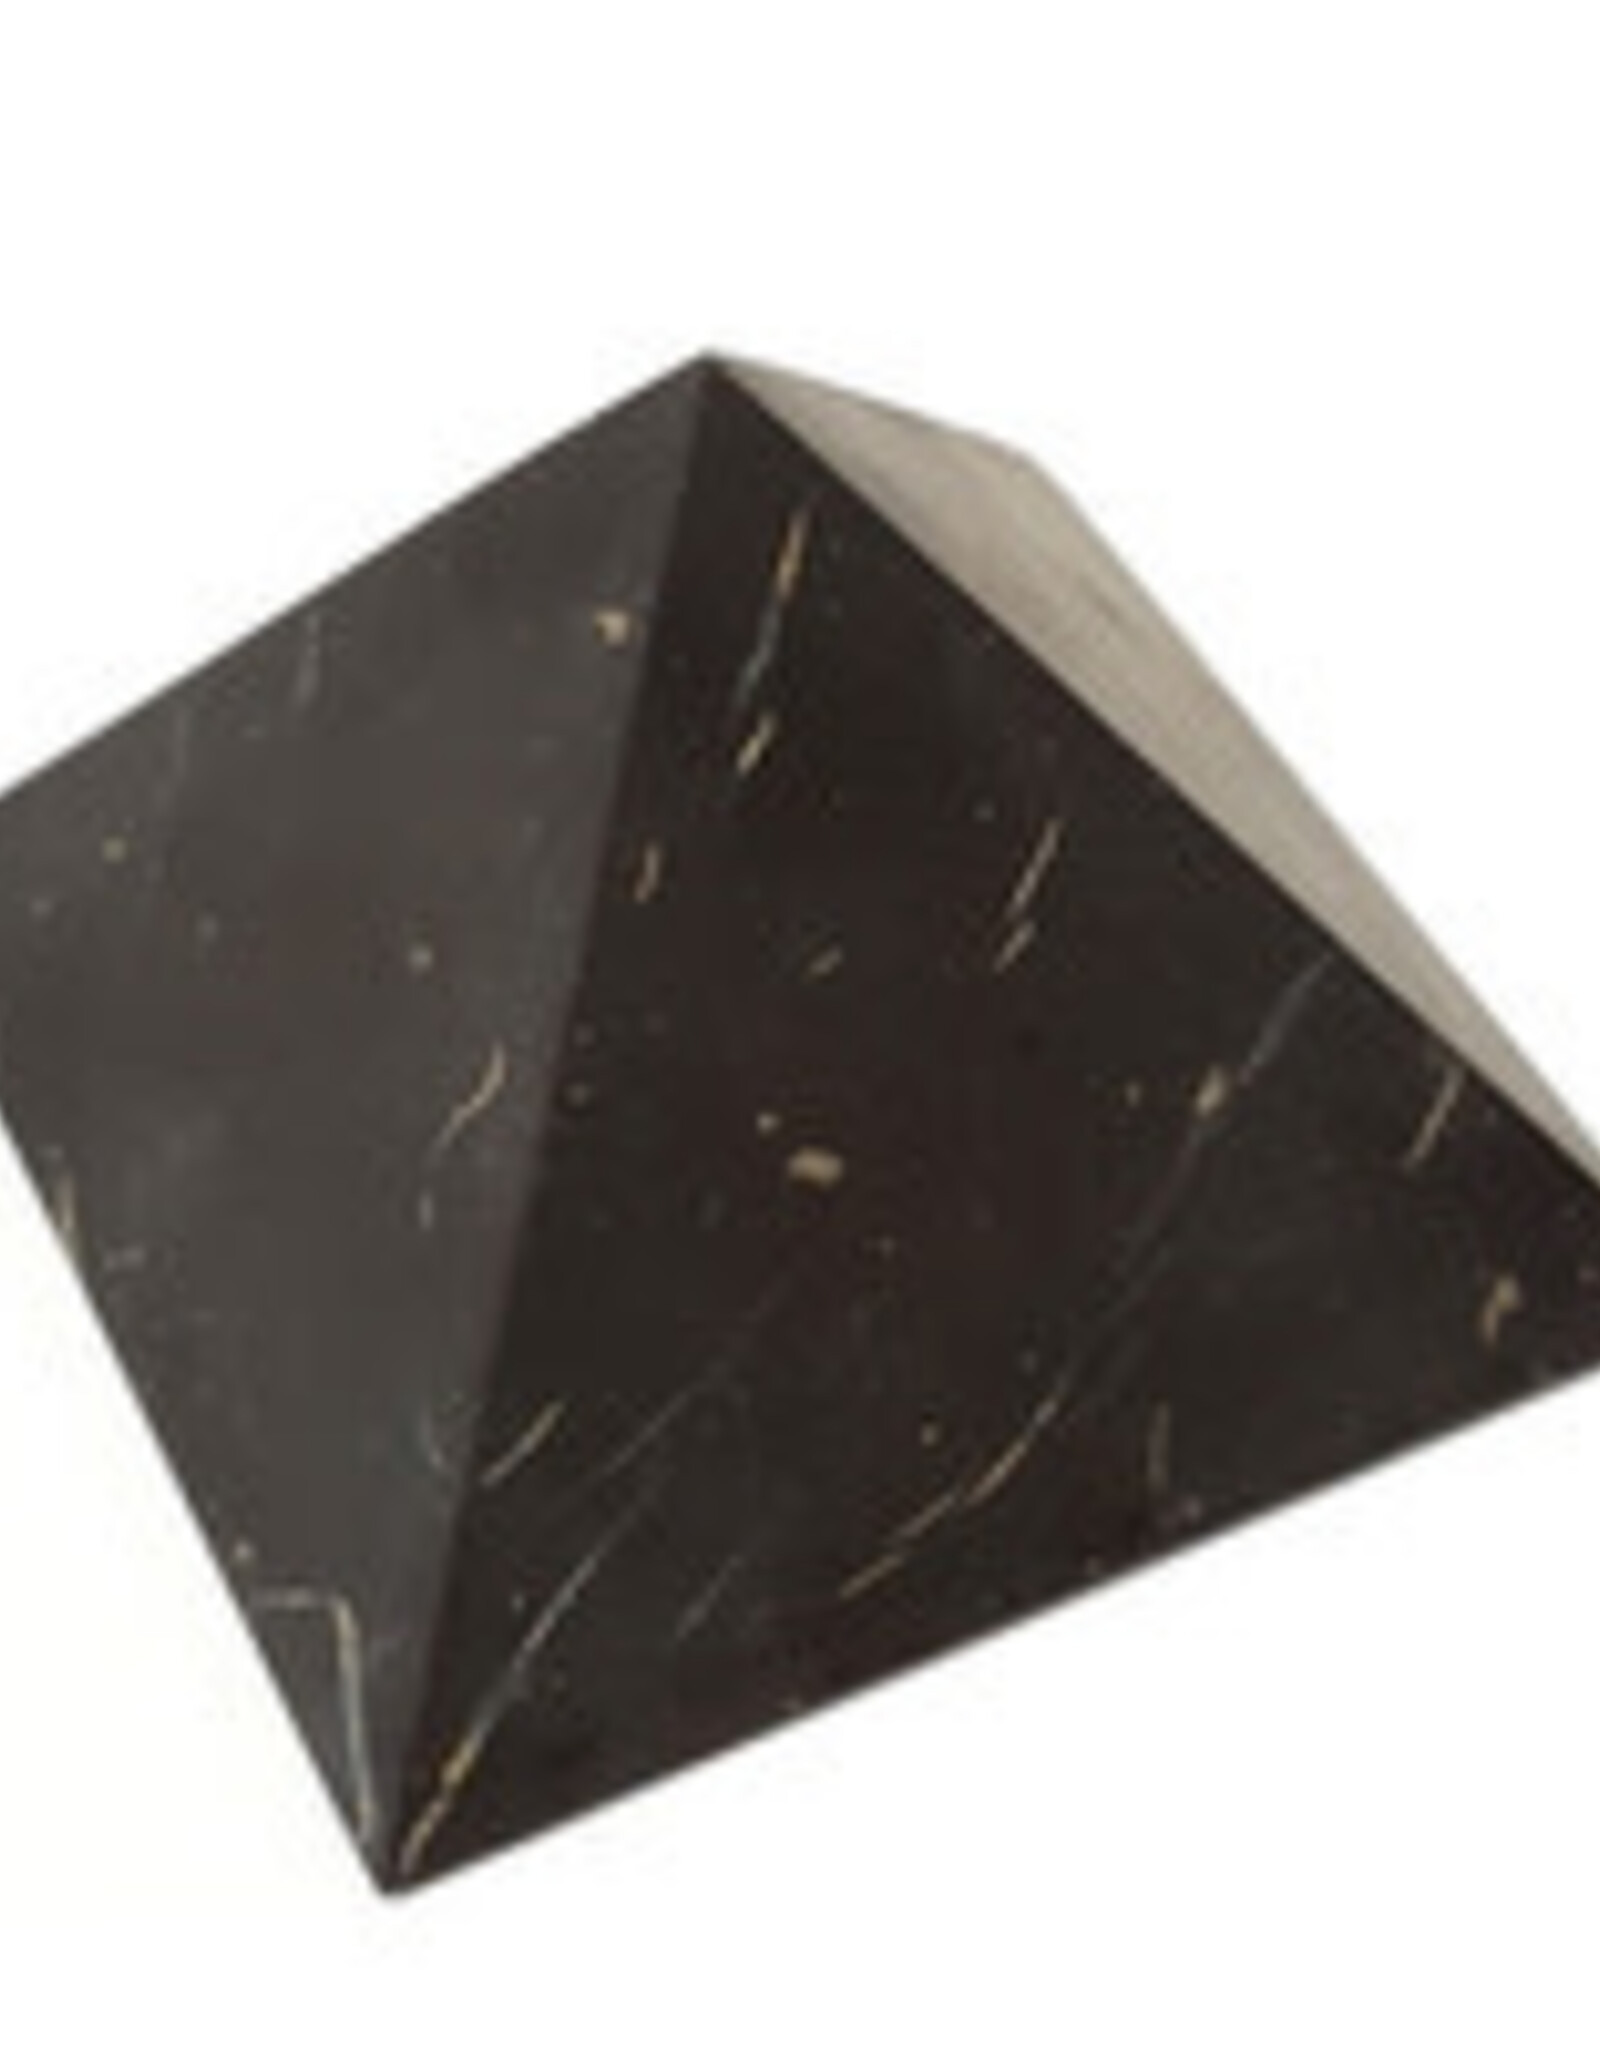 Shungite - Pyramid - UNPOLISHED 3x3cm 1.18X1.18 inch